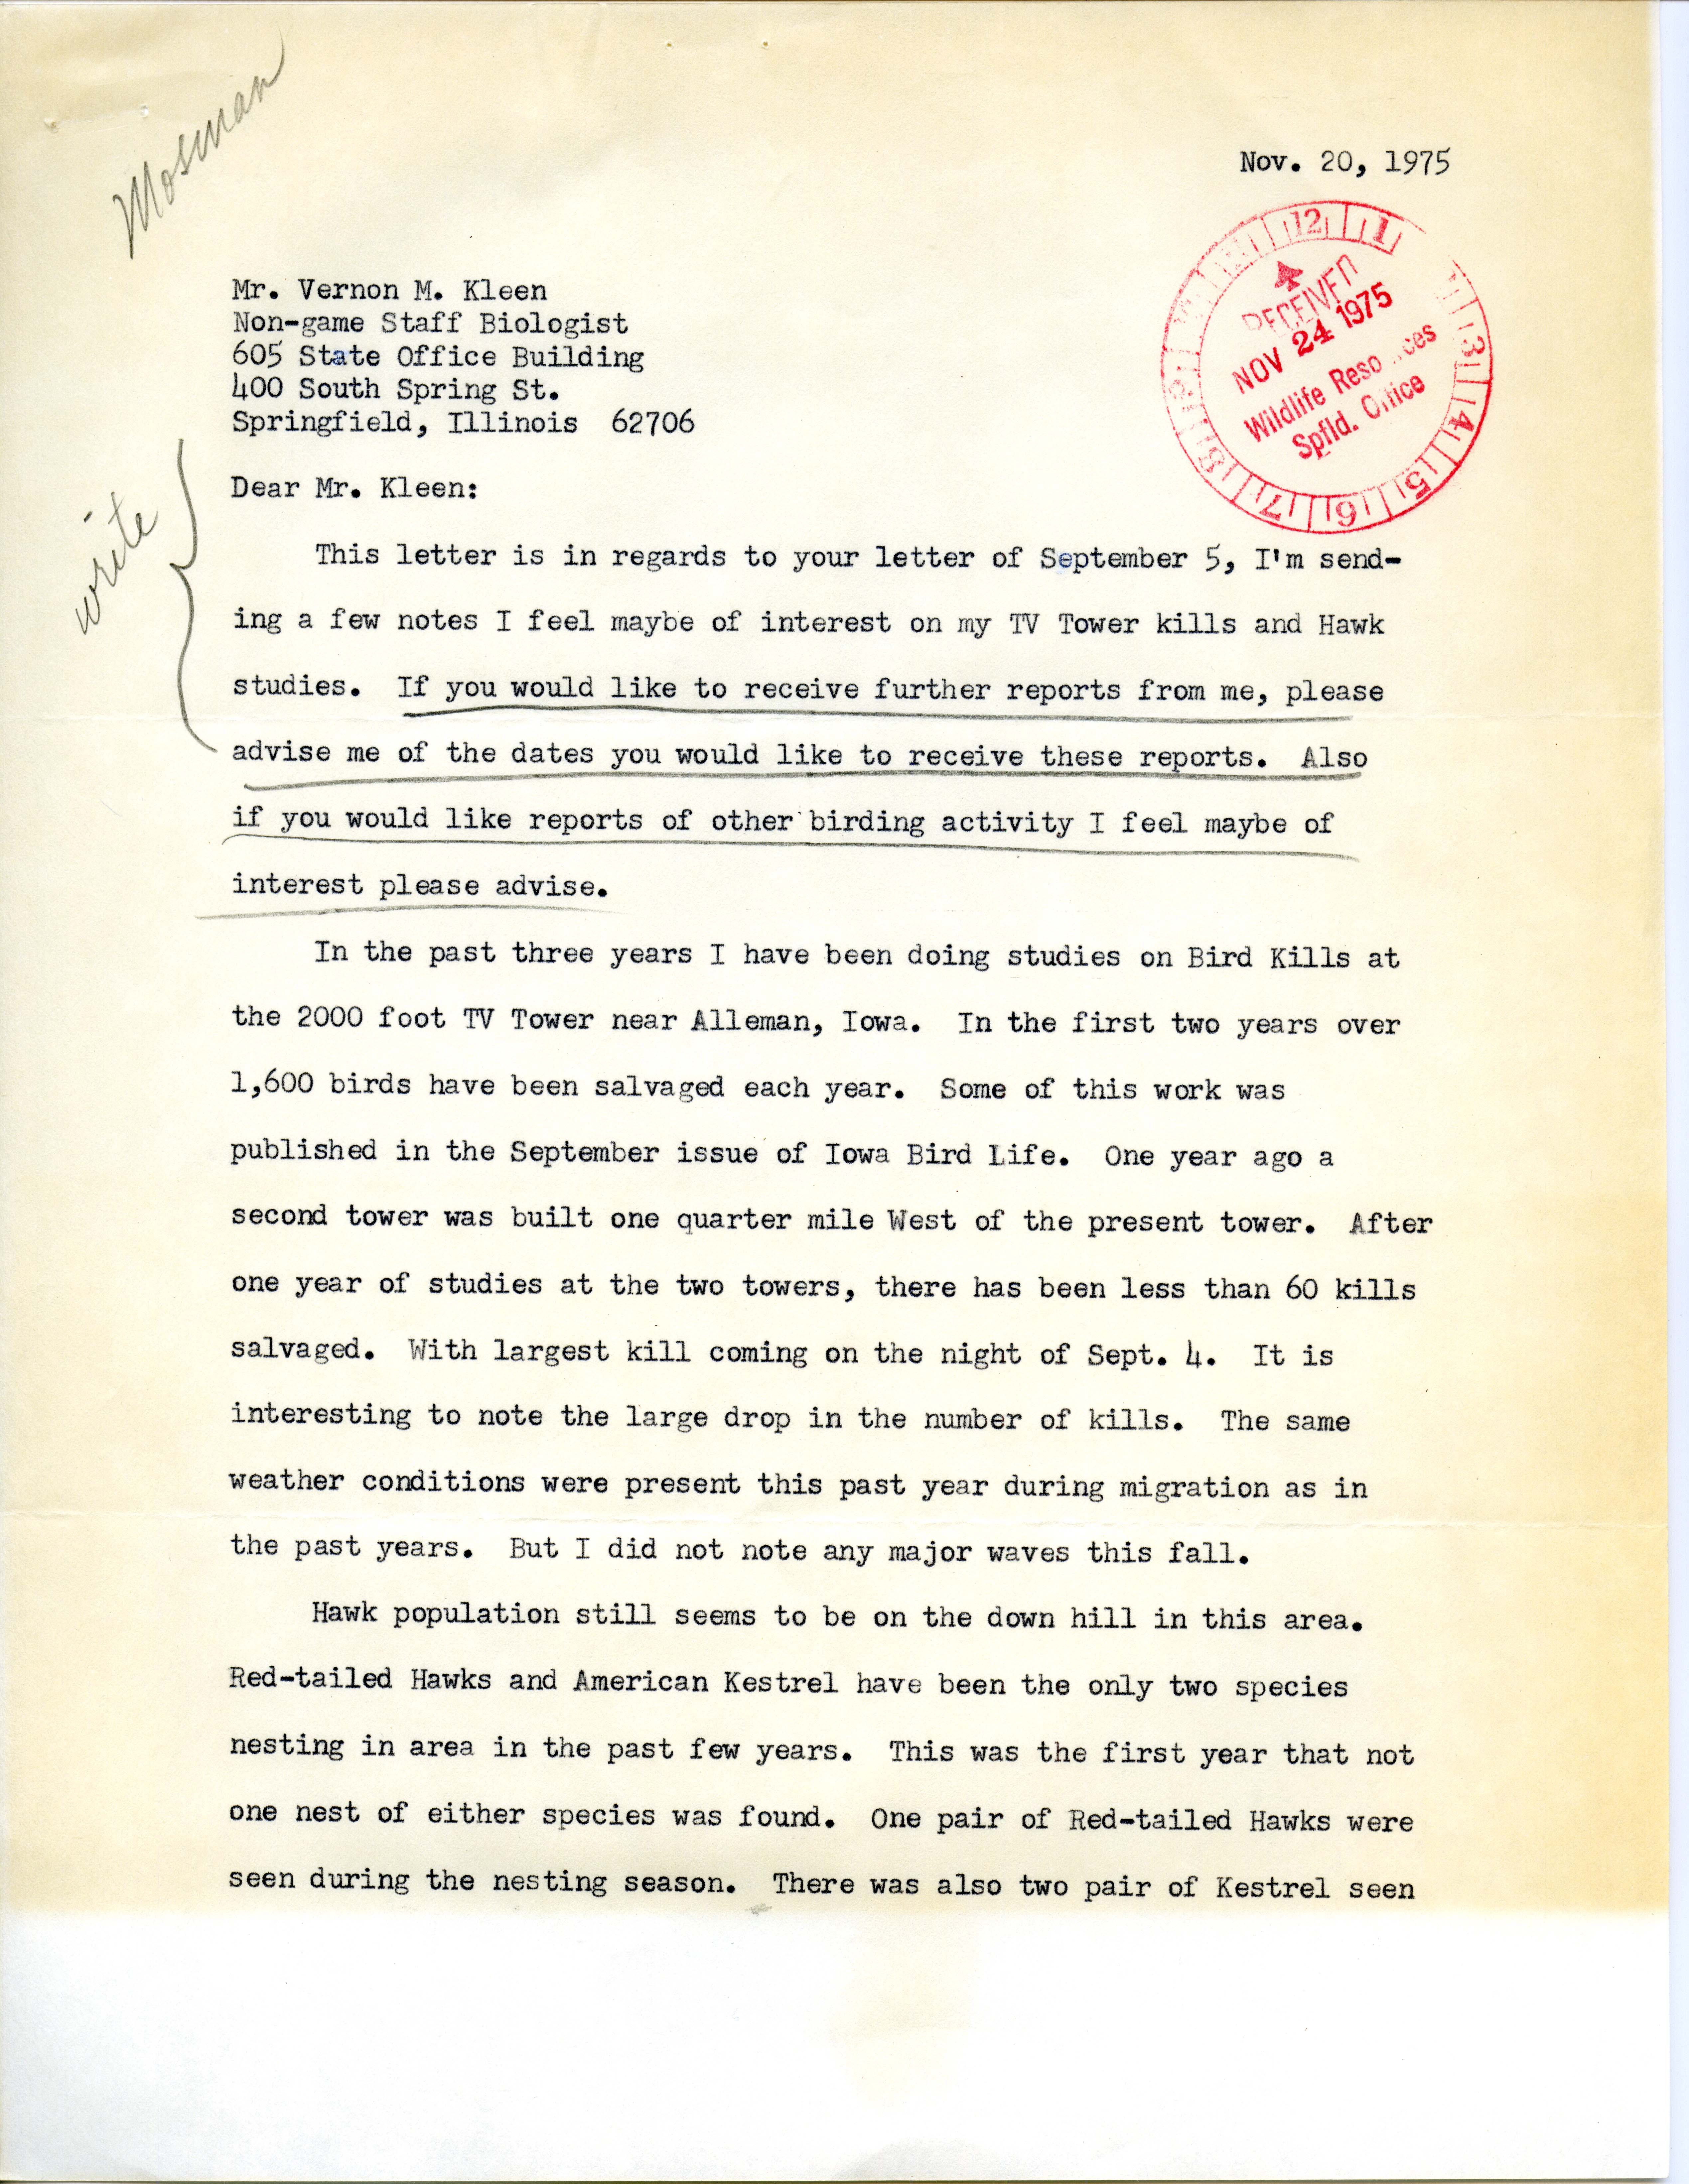 Dean Mosman letter to Vernon M. Kleen regarding bird kills at the Alleman TV tower and hawk population, November 20, 1975